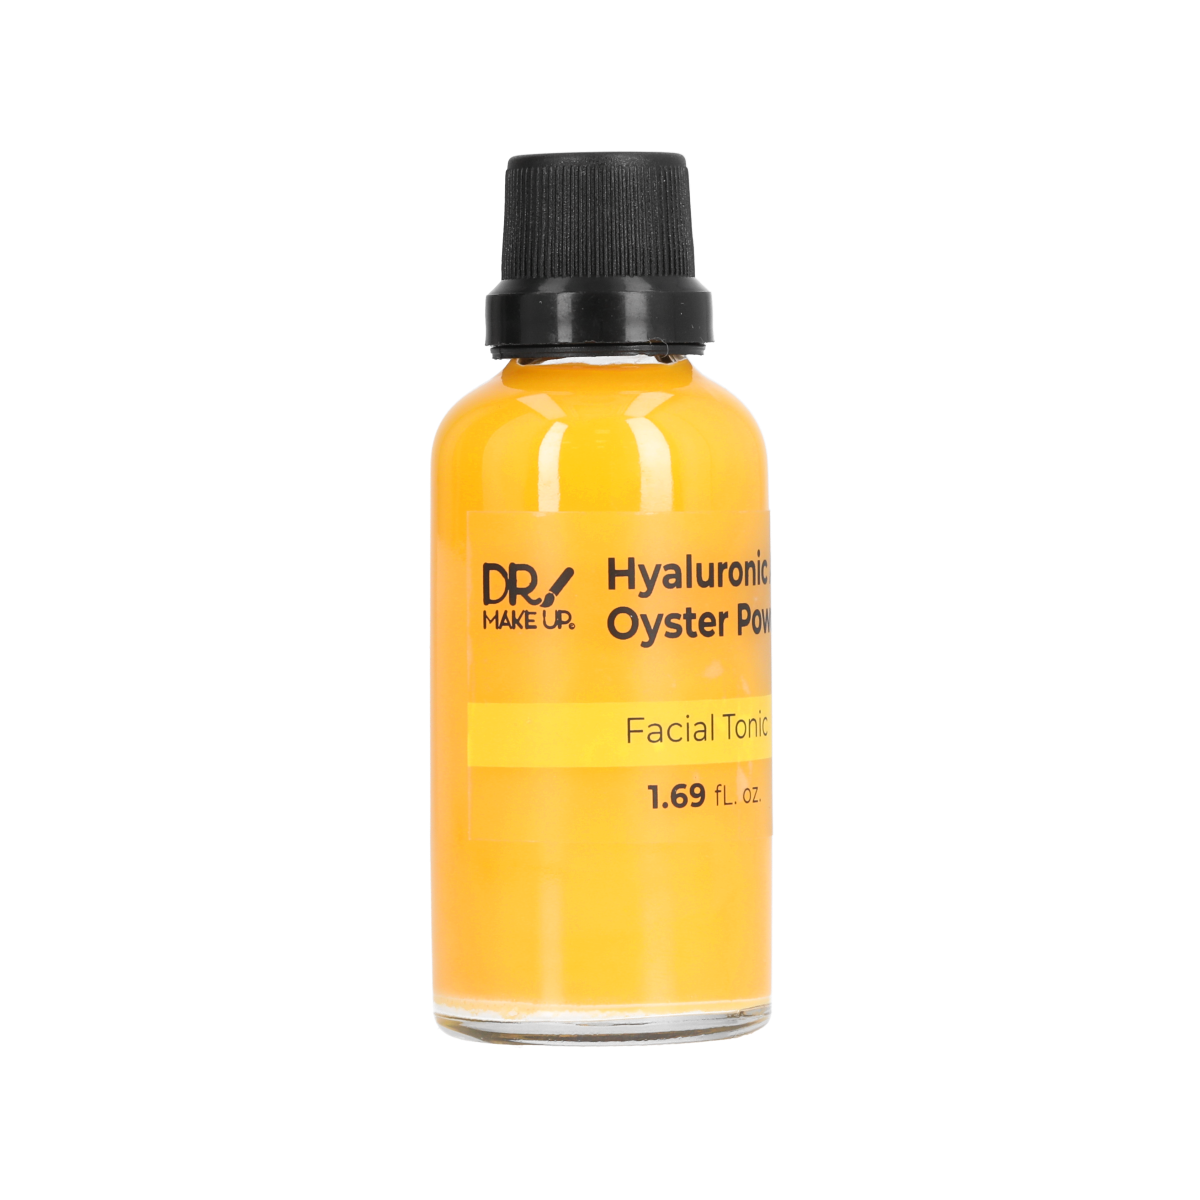 Hyaluronic Acid + Oyster Powder